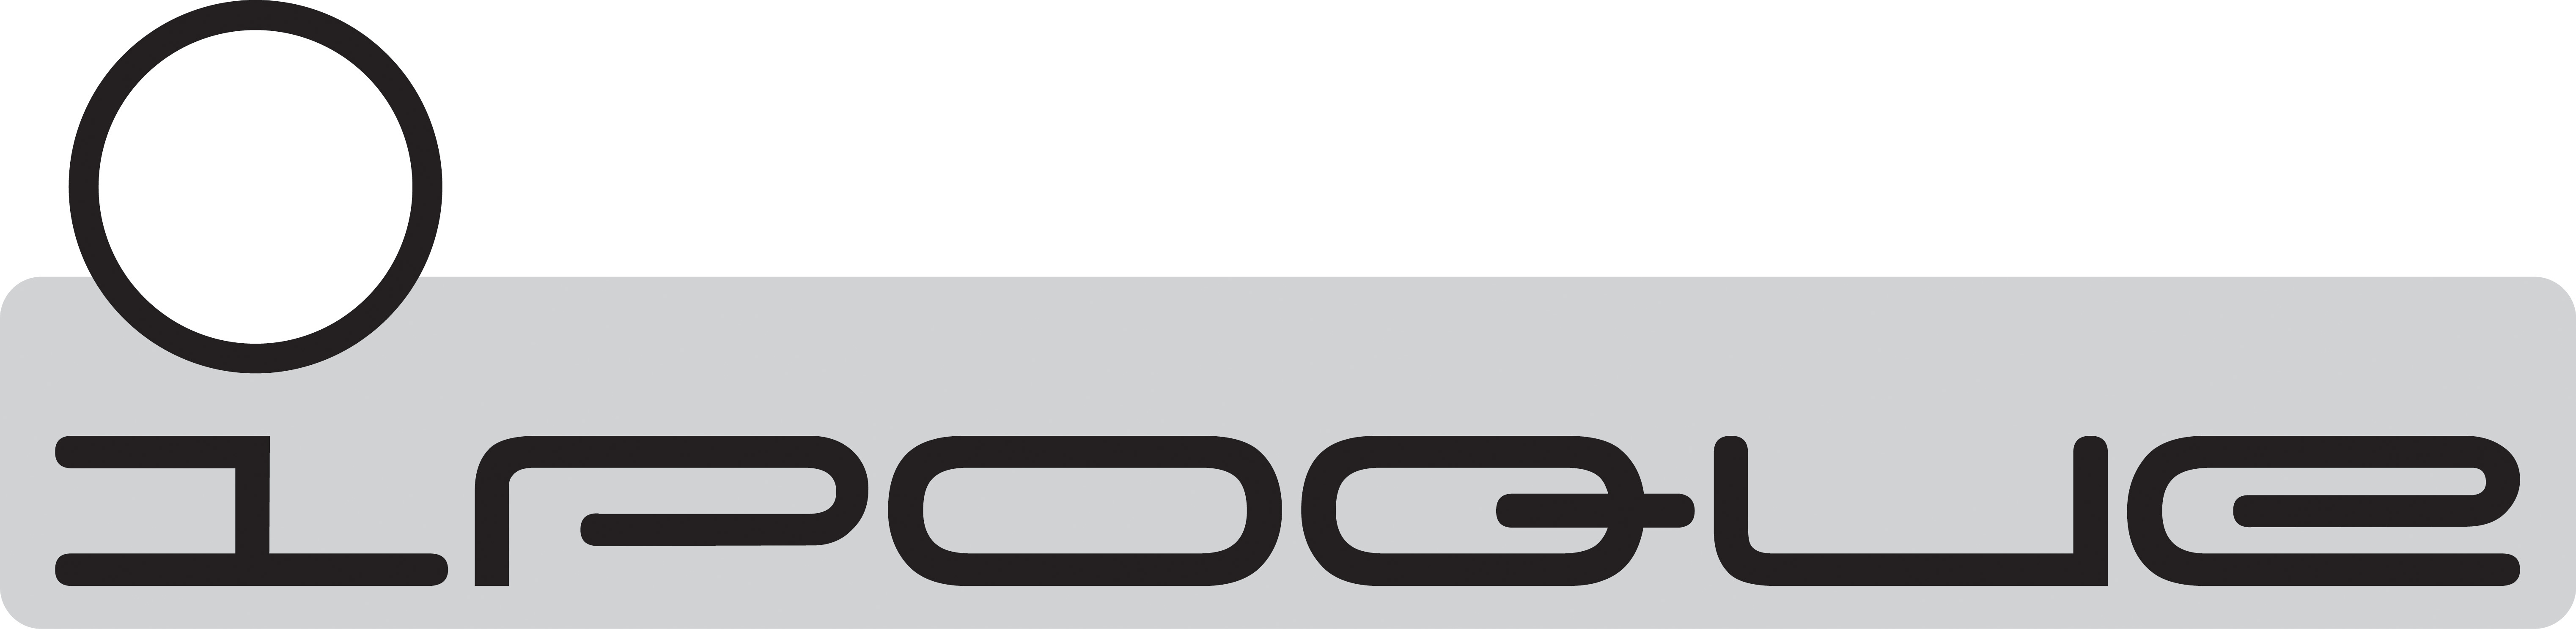 Image Company Logo photo - 1